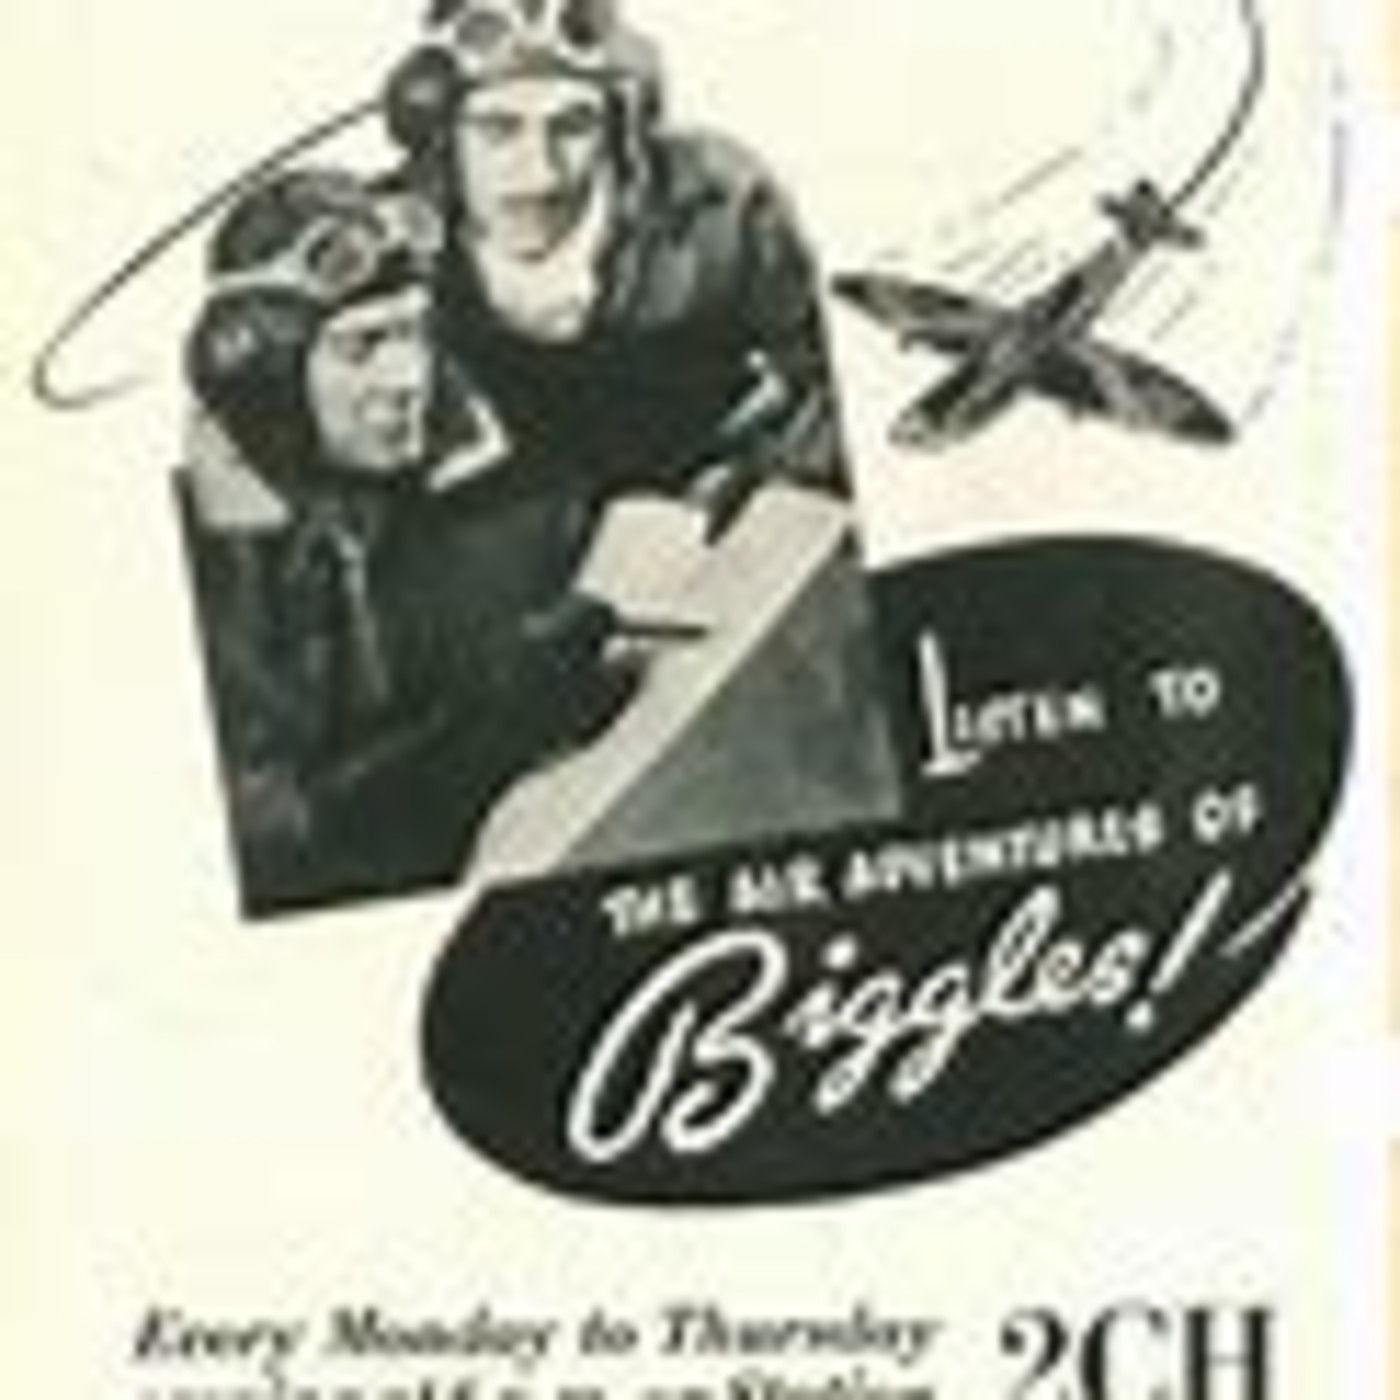 Air Adventures of Biggles xx-xx-xx International Brigade (27)